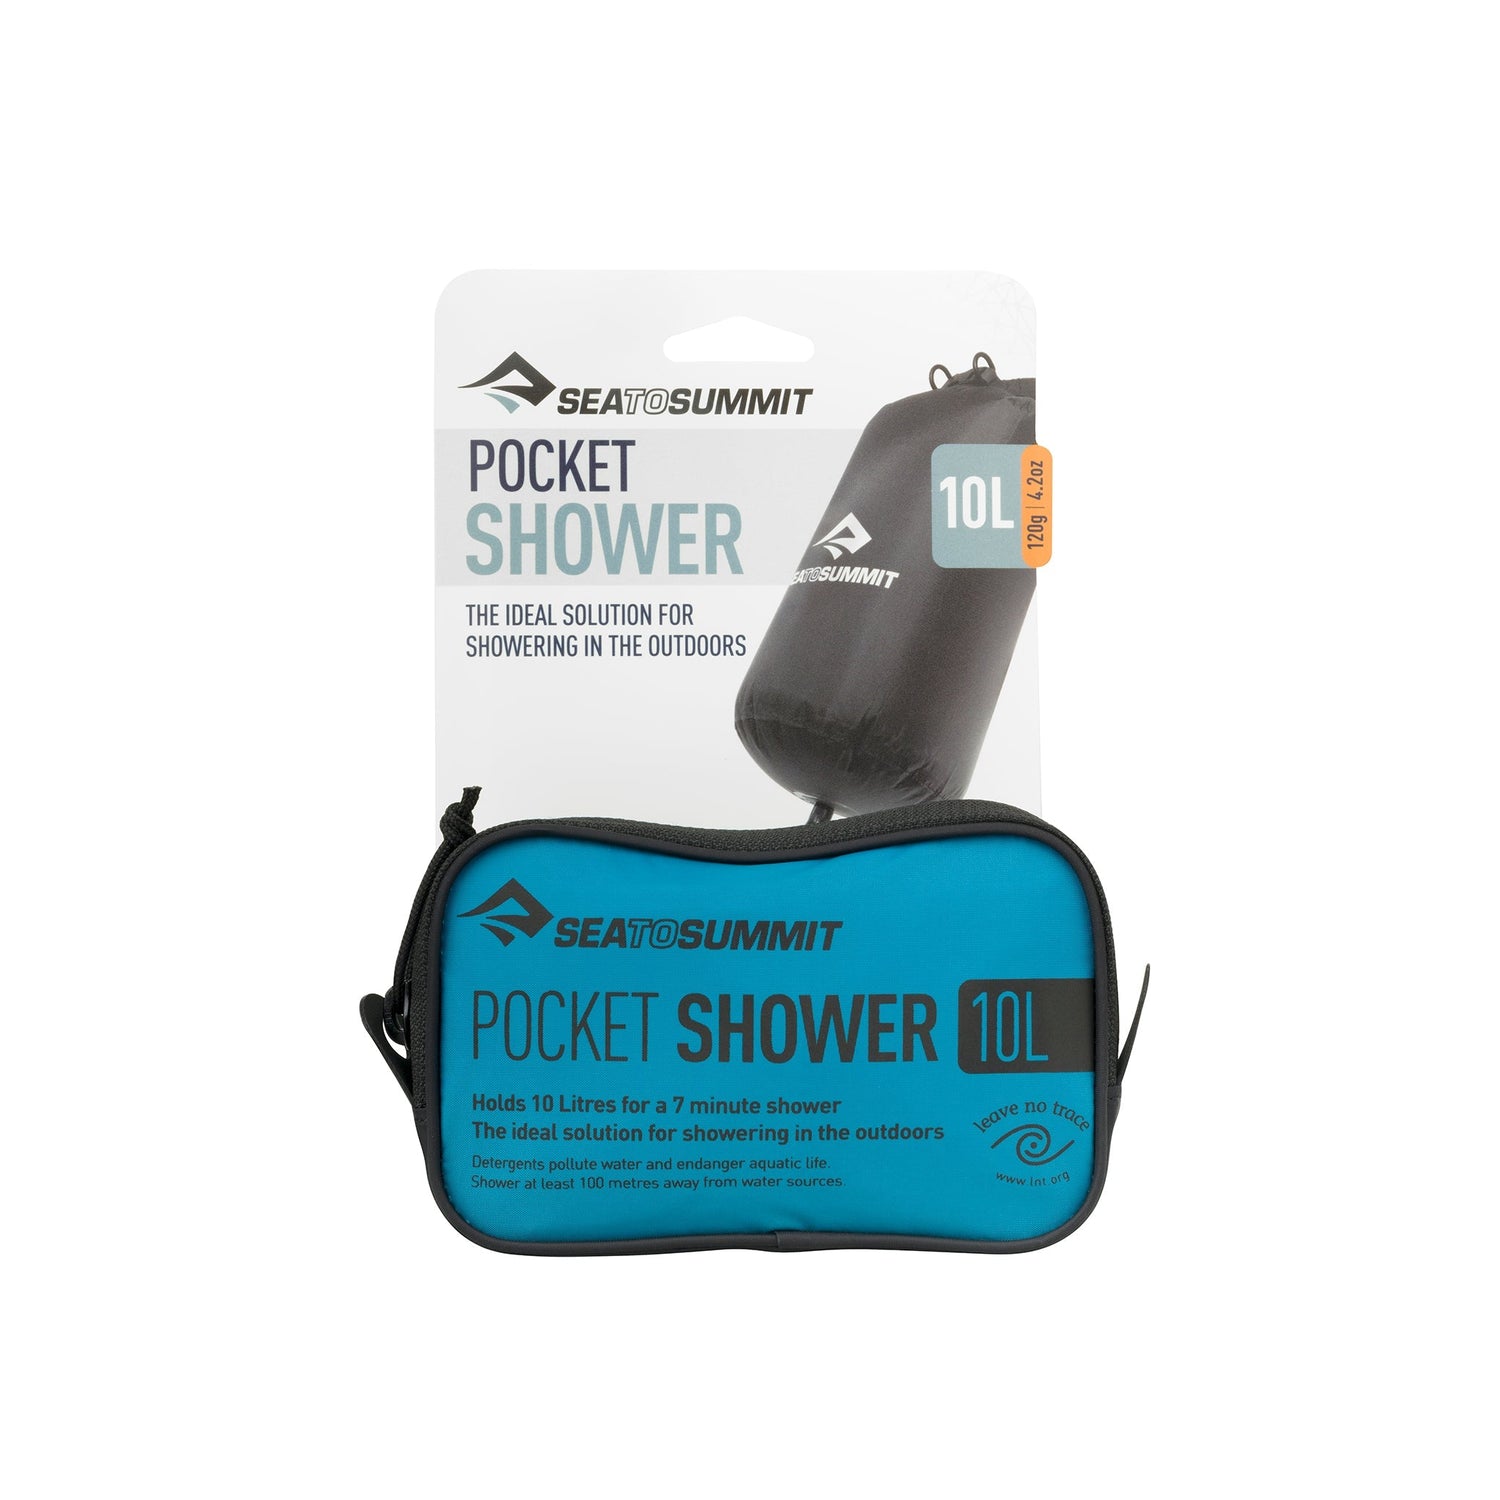 Douche de poche Pocket Shower